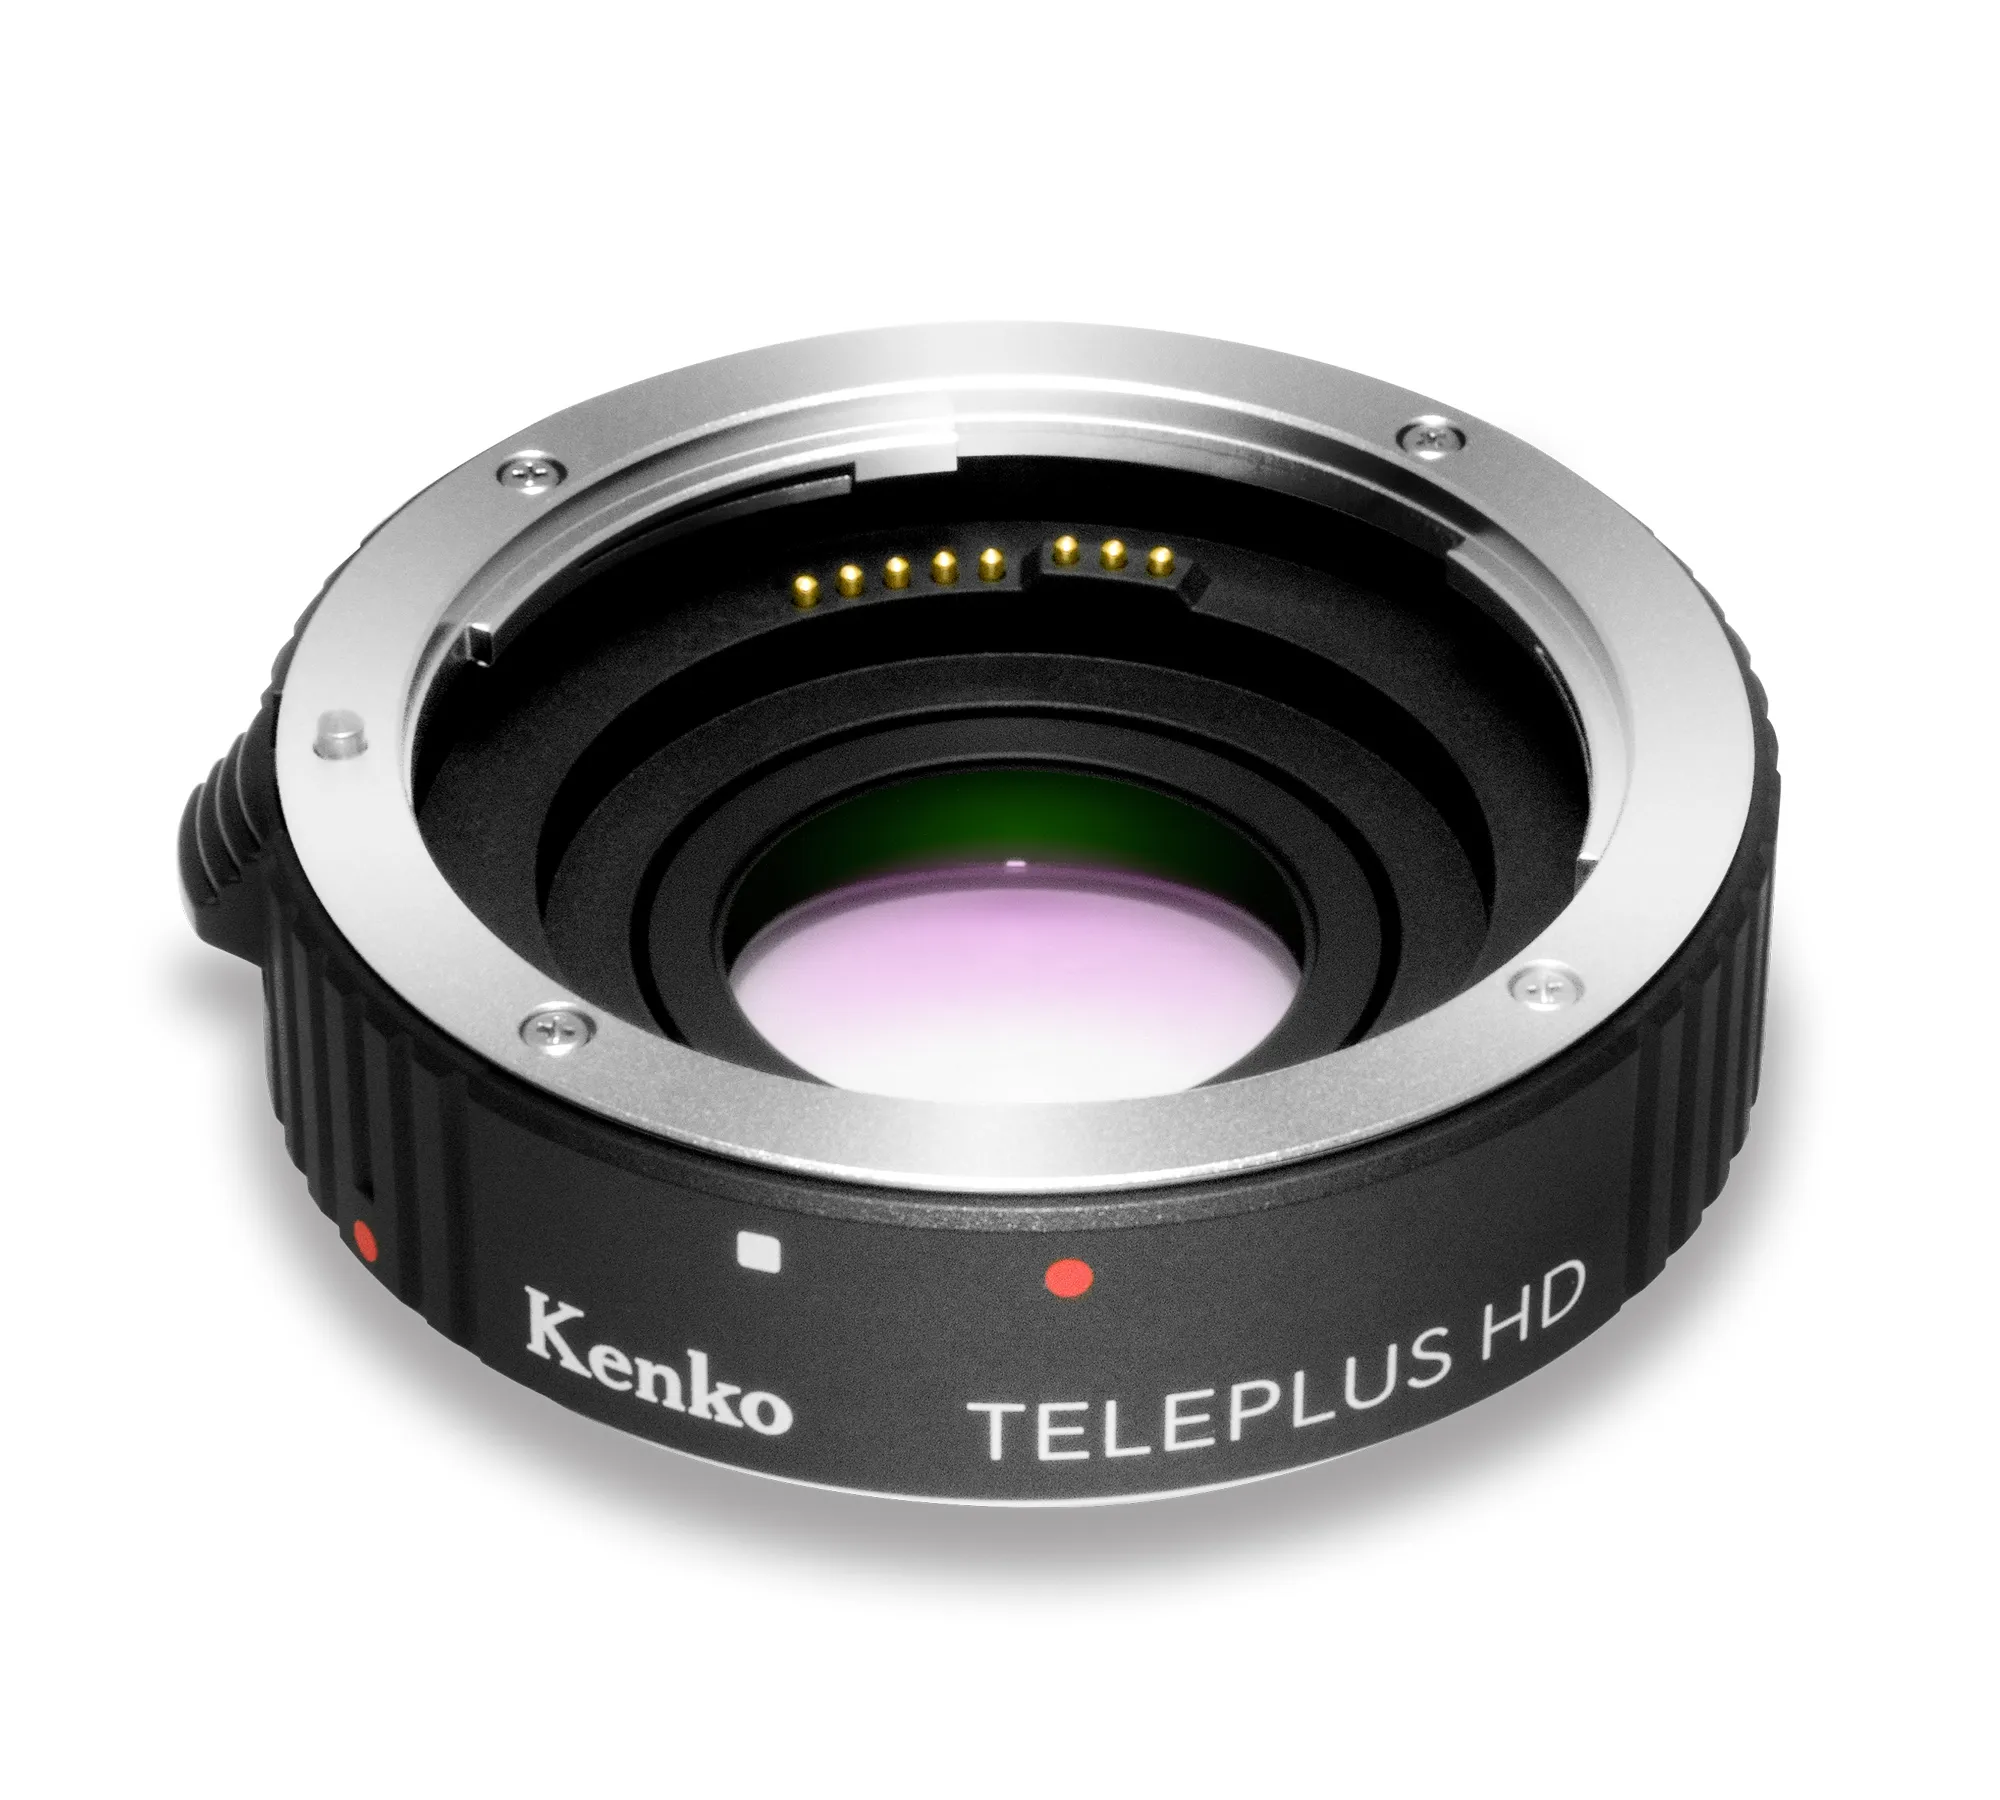 Kenko Teleplus HD DGX 1.4x Teleconverter for Nikon